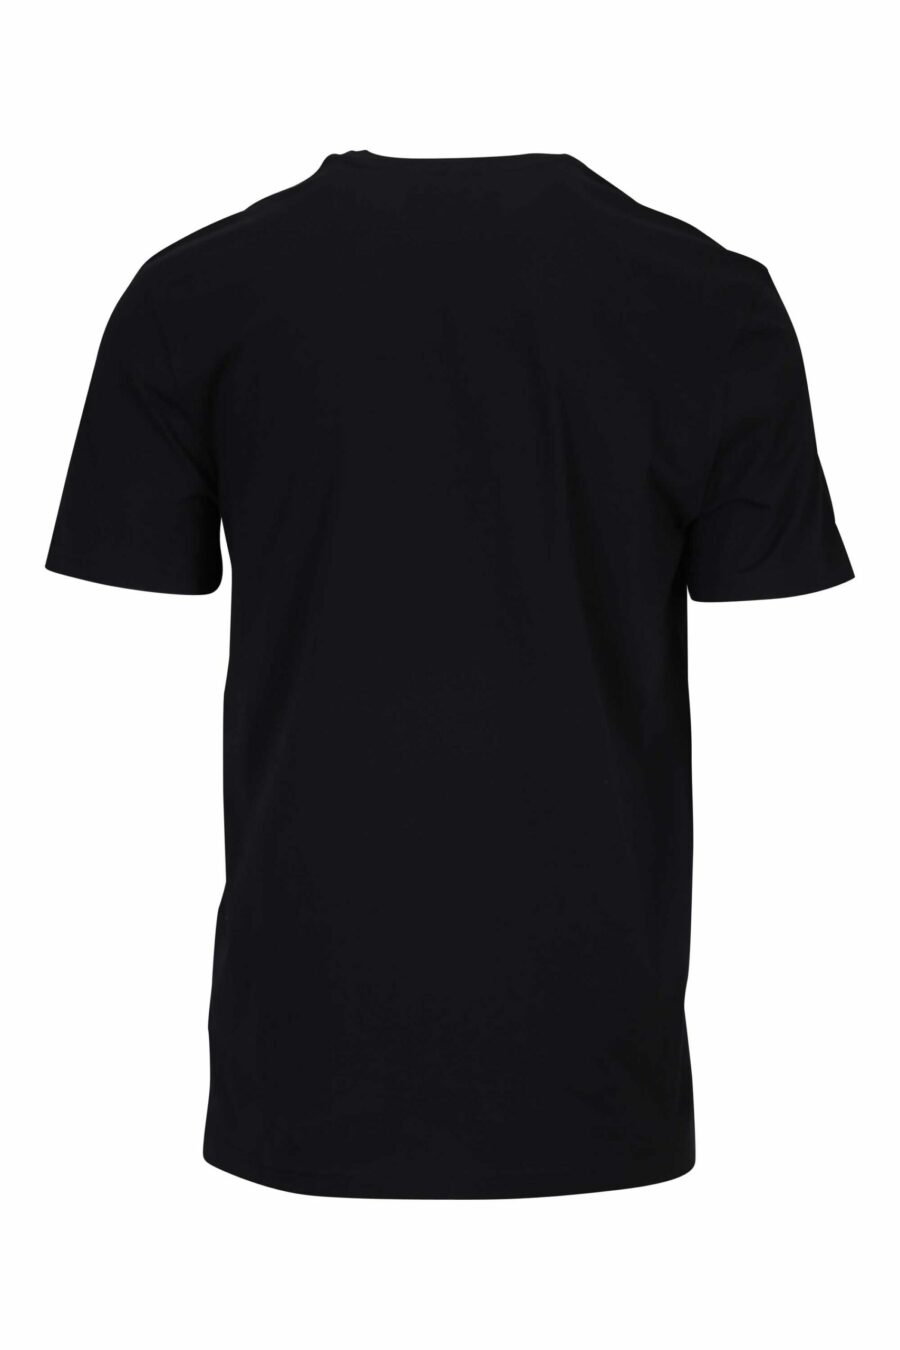 Camiseta negra con minilogo etiqueta blanca - 667113394862 1 scaled